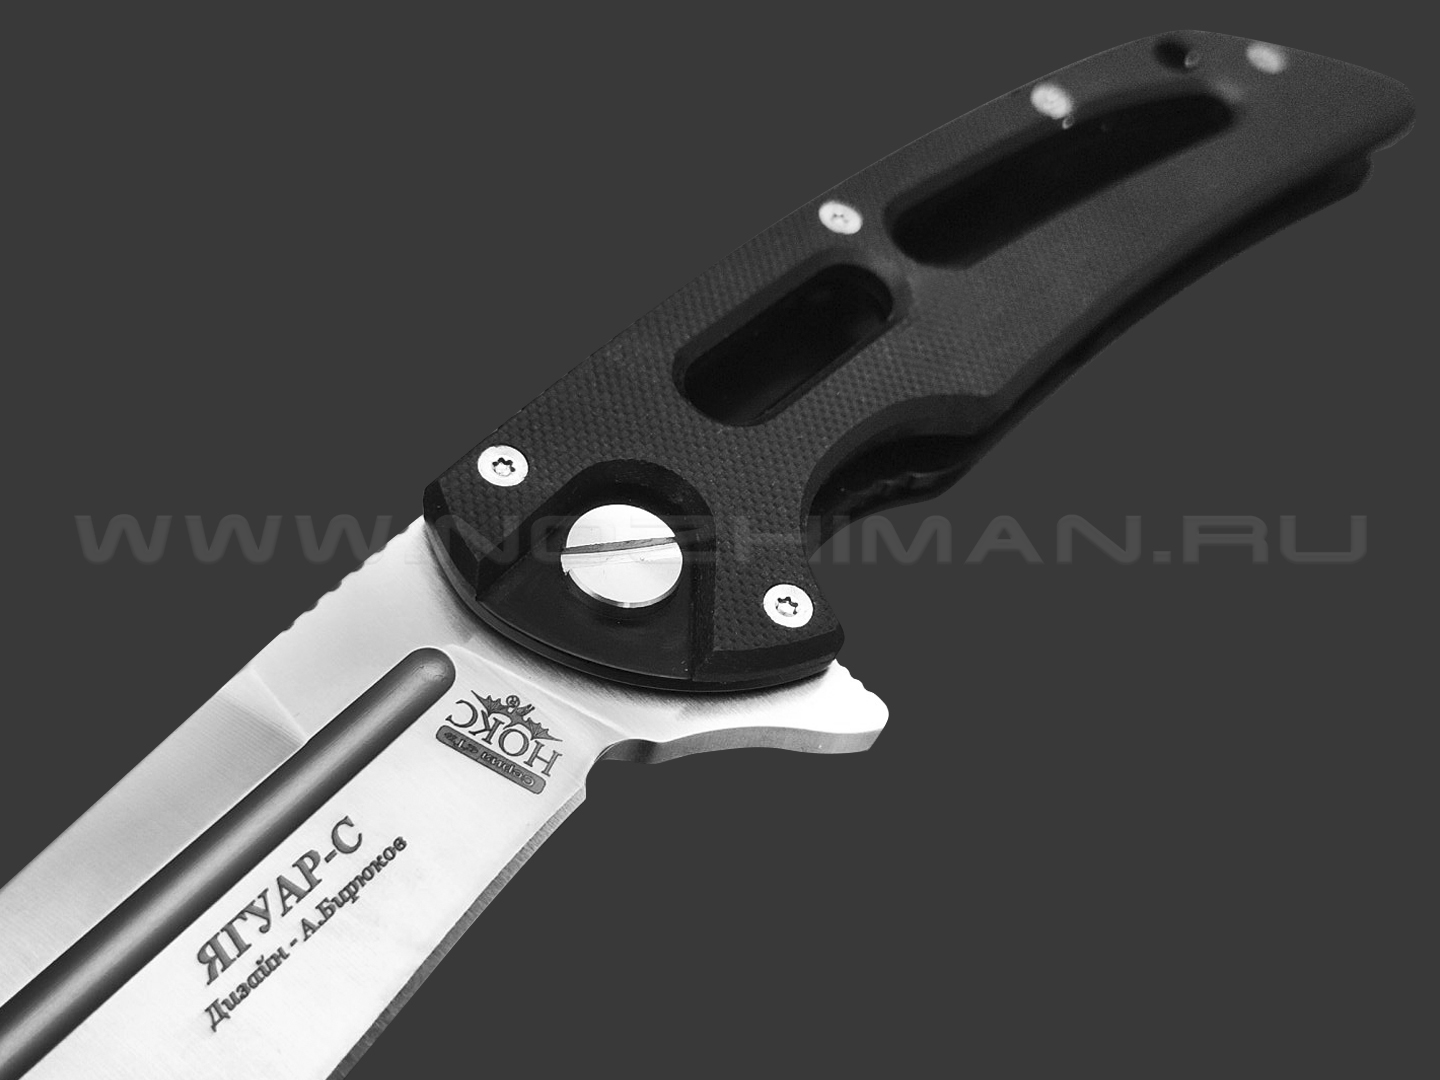 Нокс складной нож Ягуар-С 343-100406 сталь D2 satin, рукоять G10 black